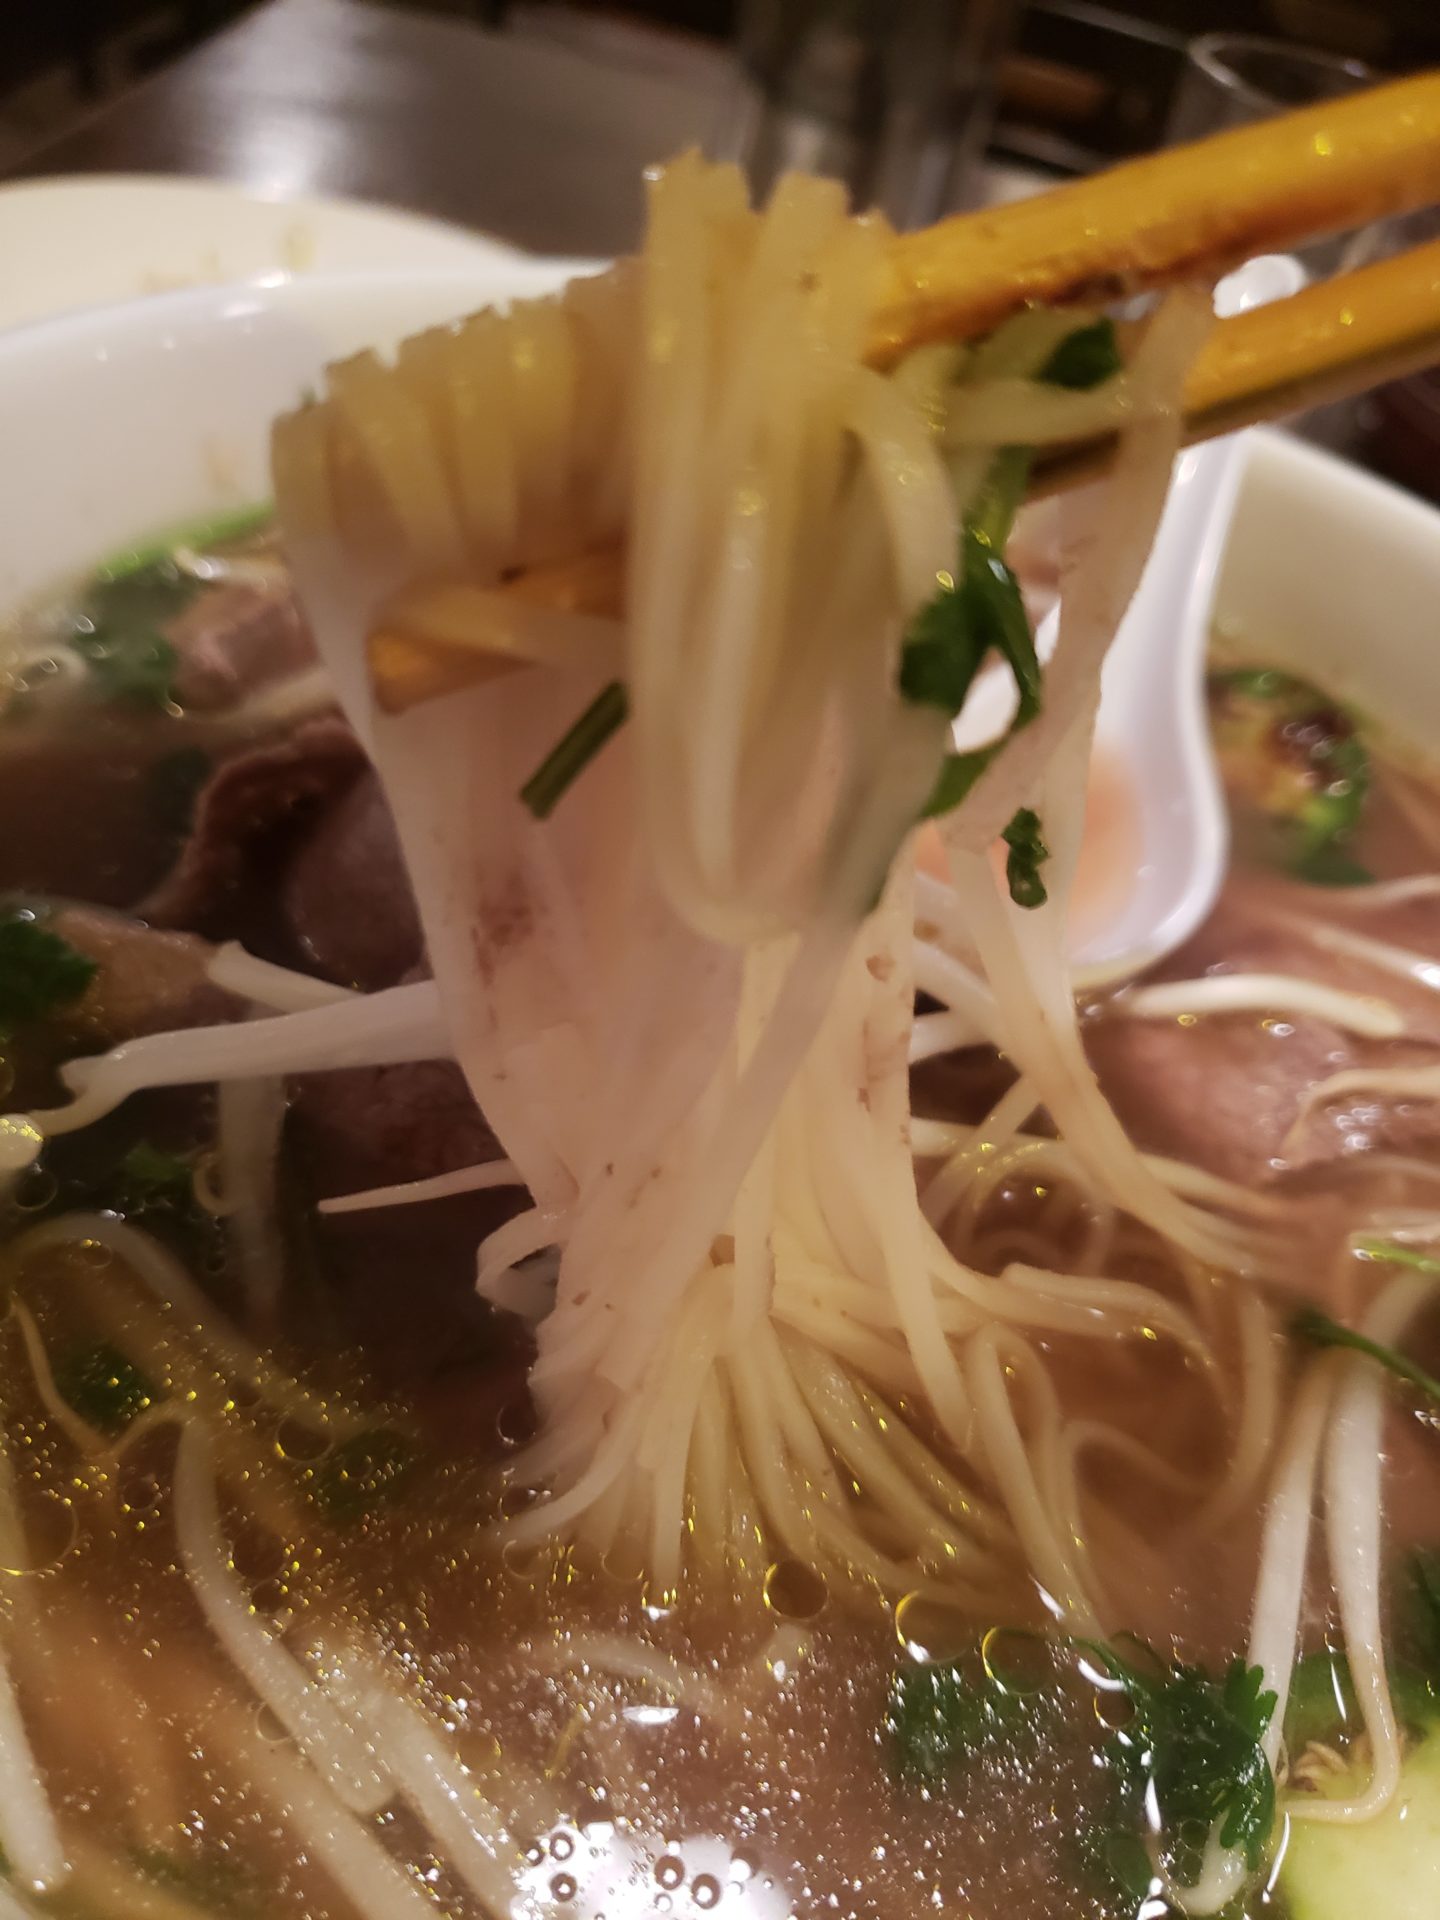 a bowl of soup with chopsticks